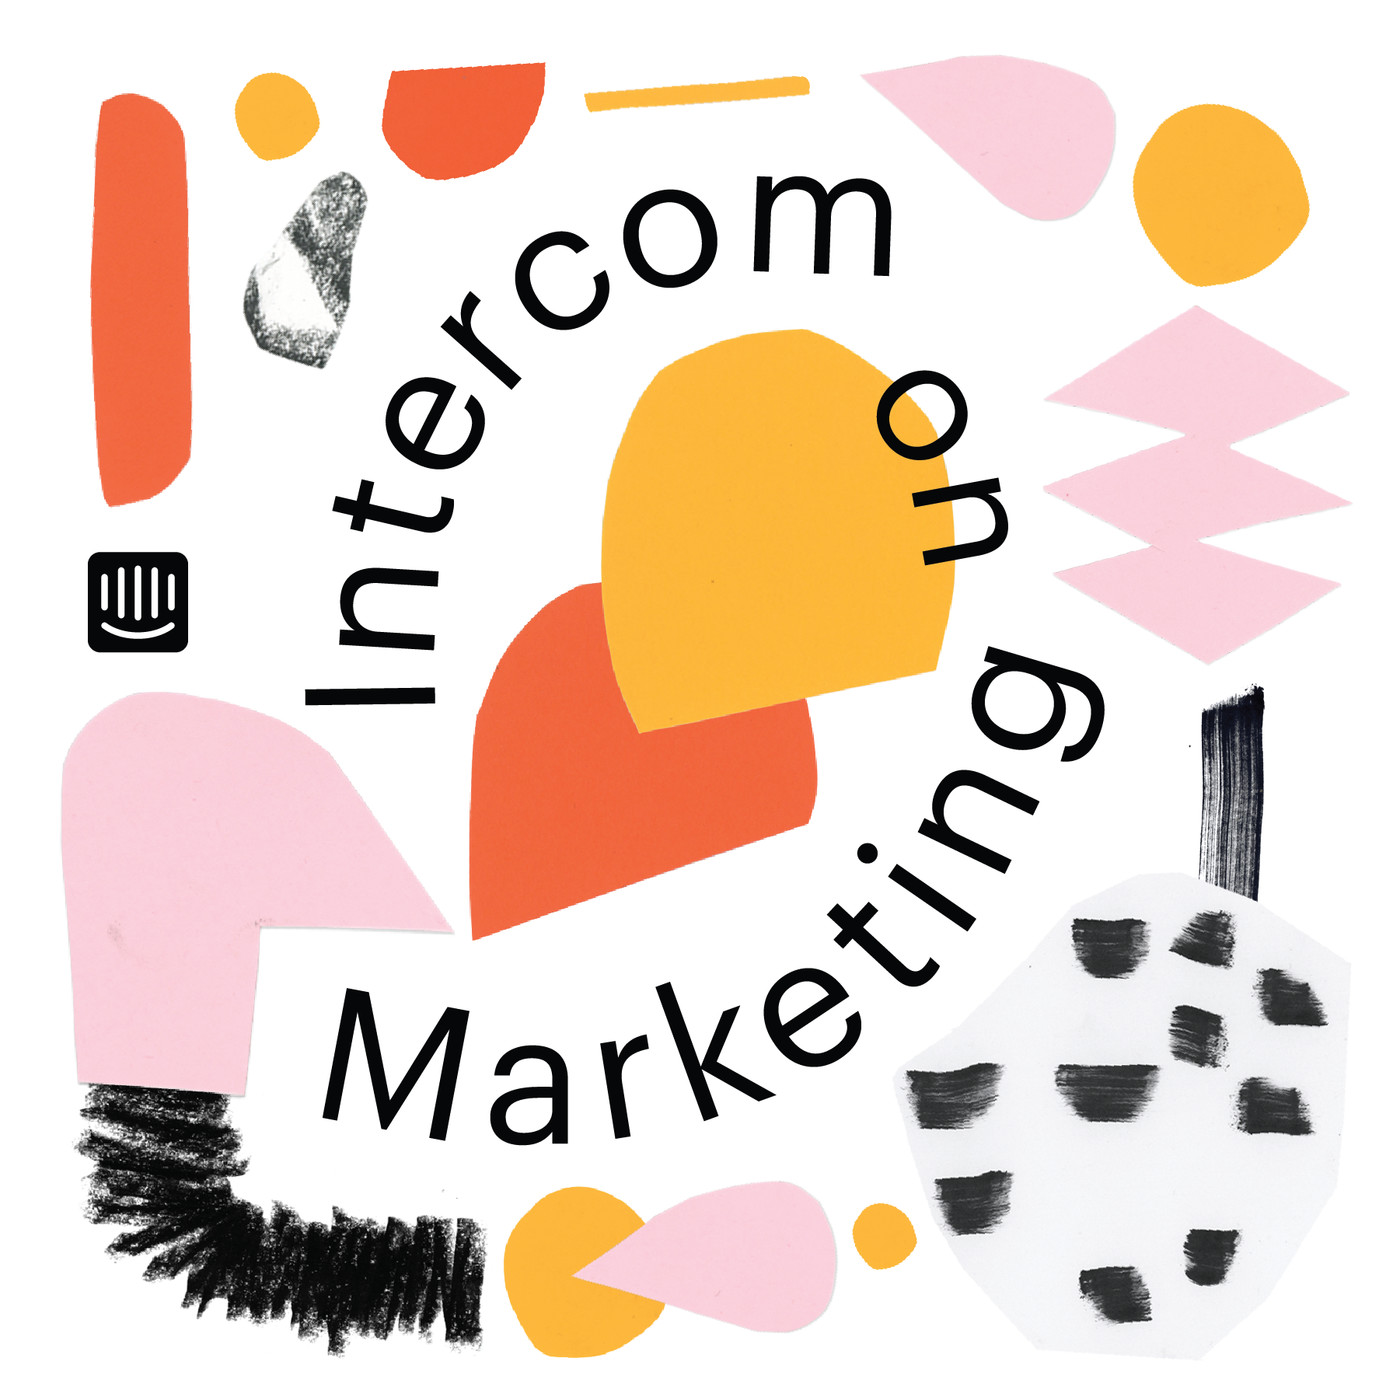 Introducing Intercom on Marketing